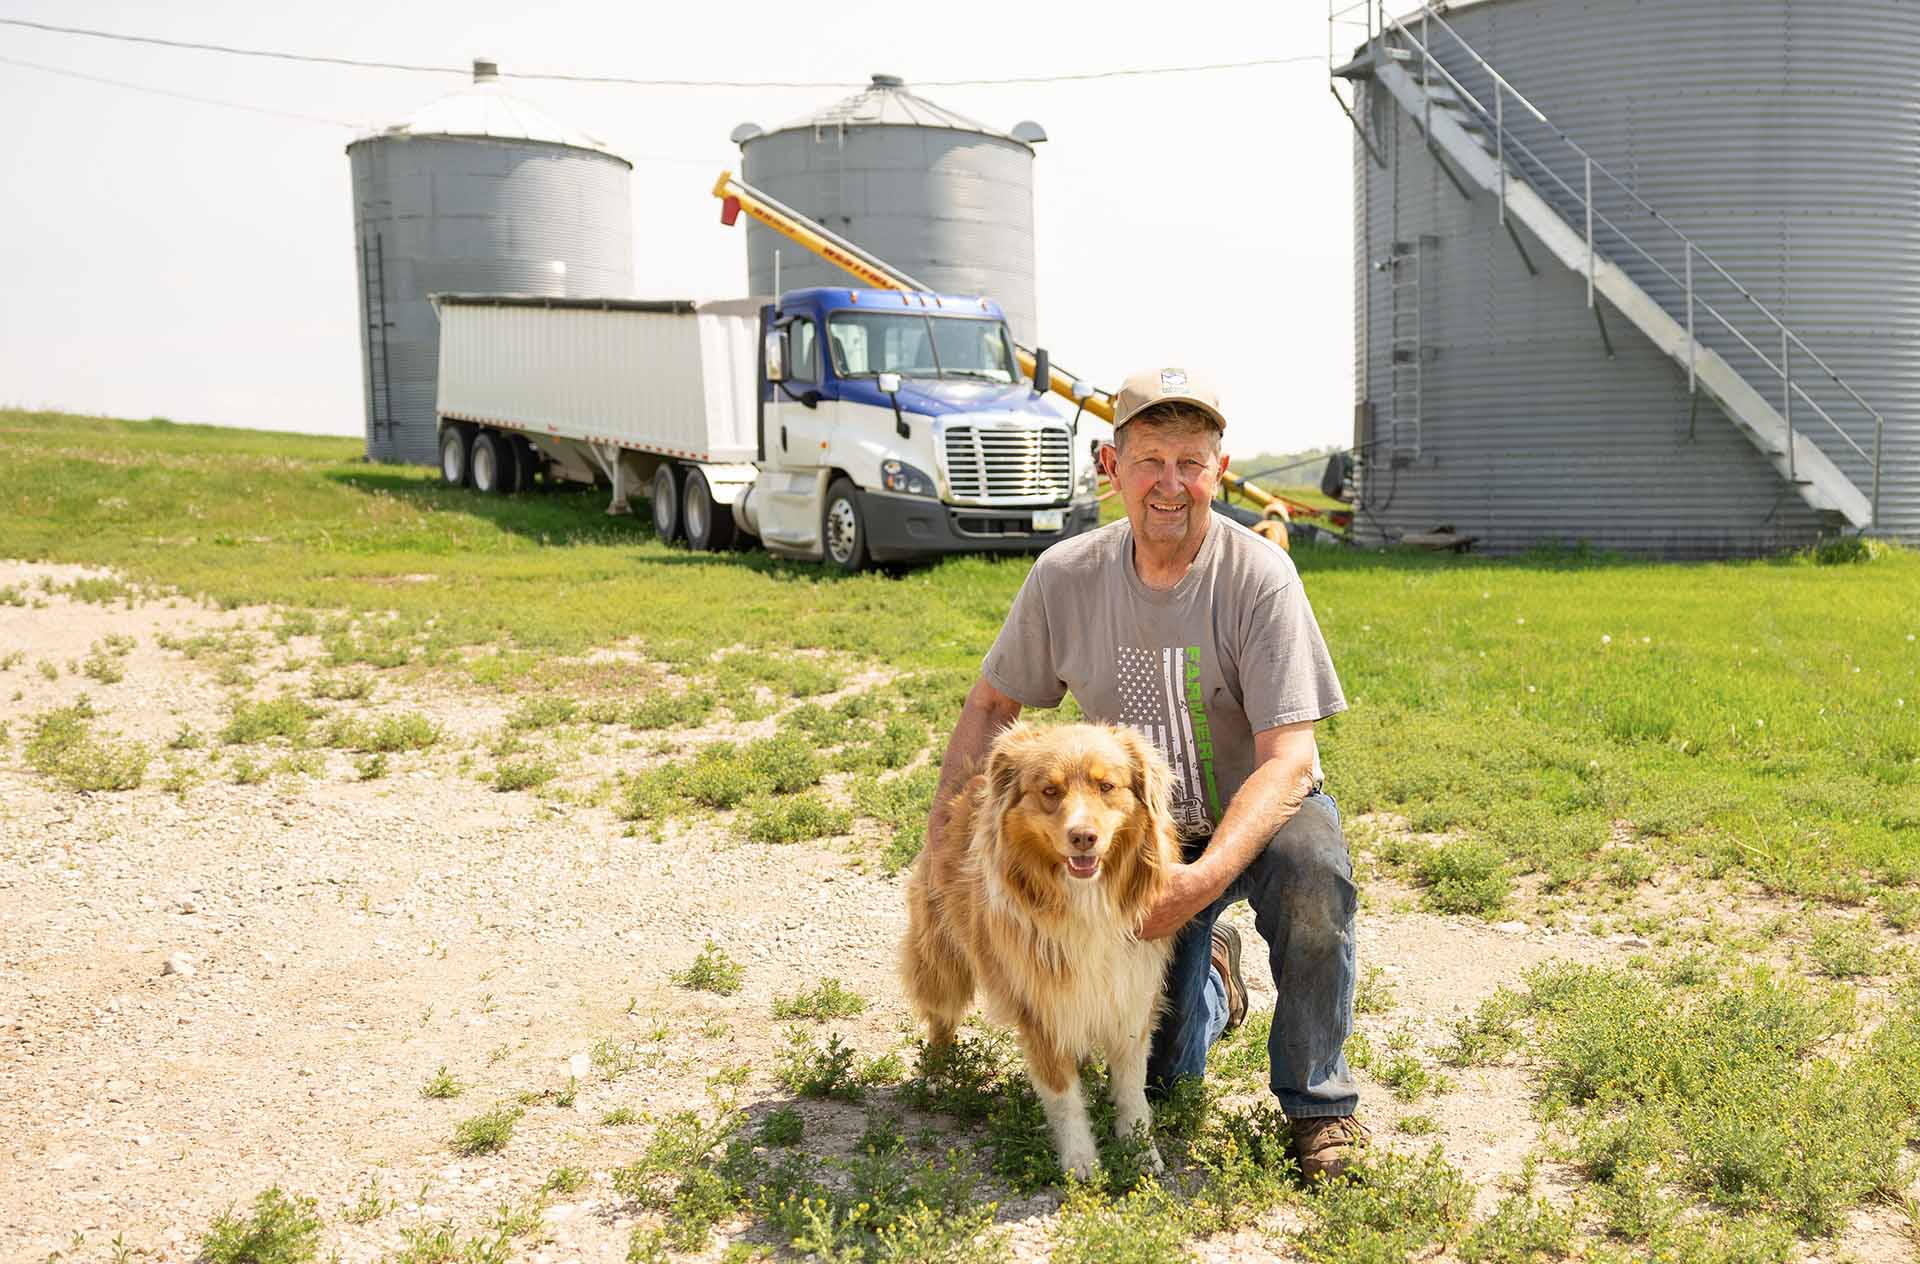 Farmer kneeling next to dog on farm